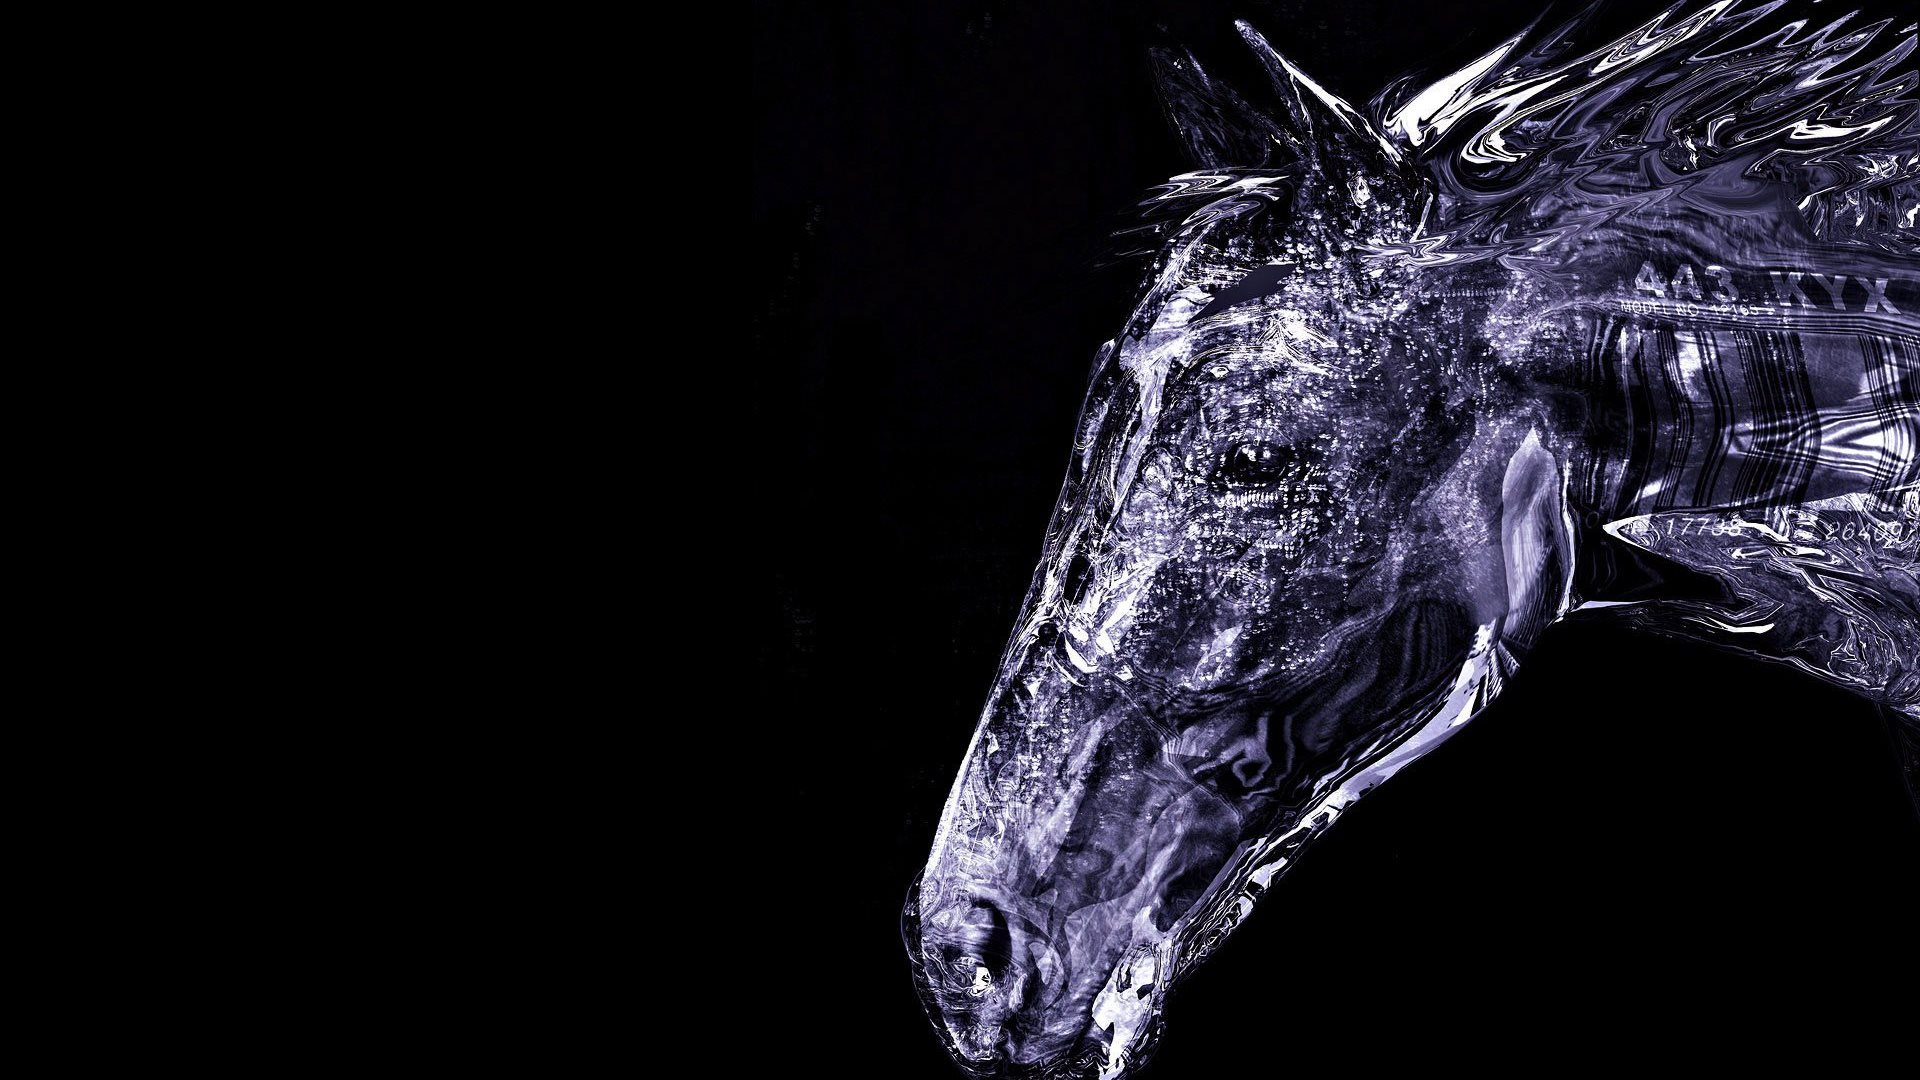 fondos de pantalla hd para pc,negro,en blanco y negro,caballo,hocico,monocromo